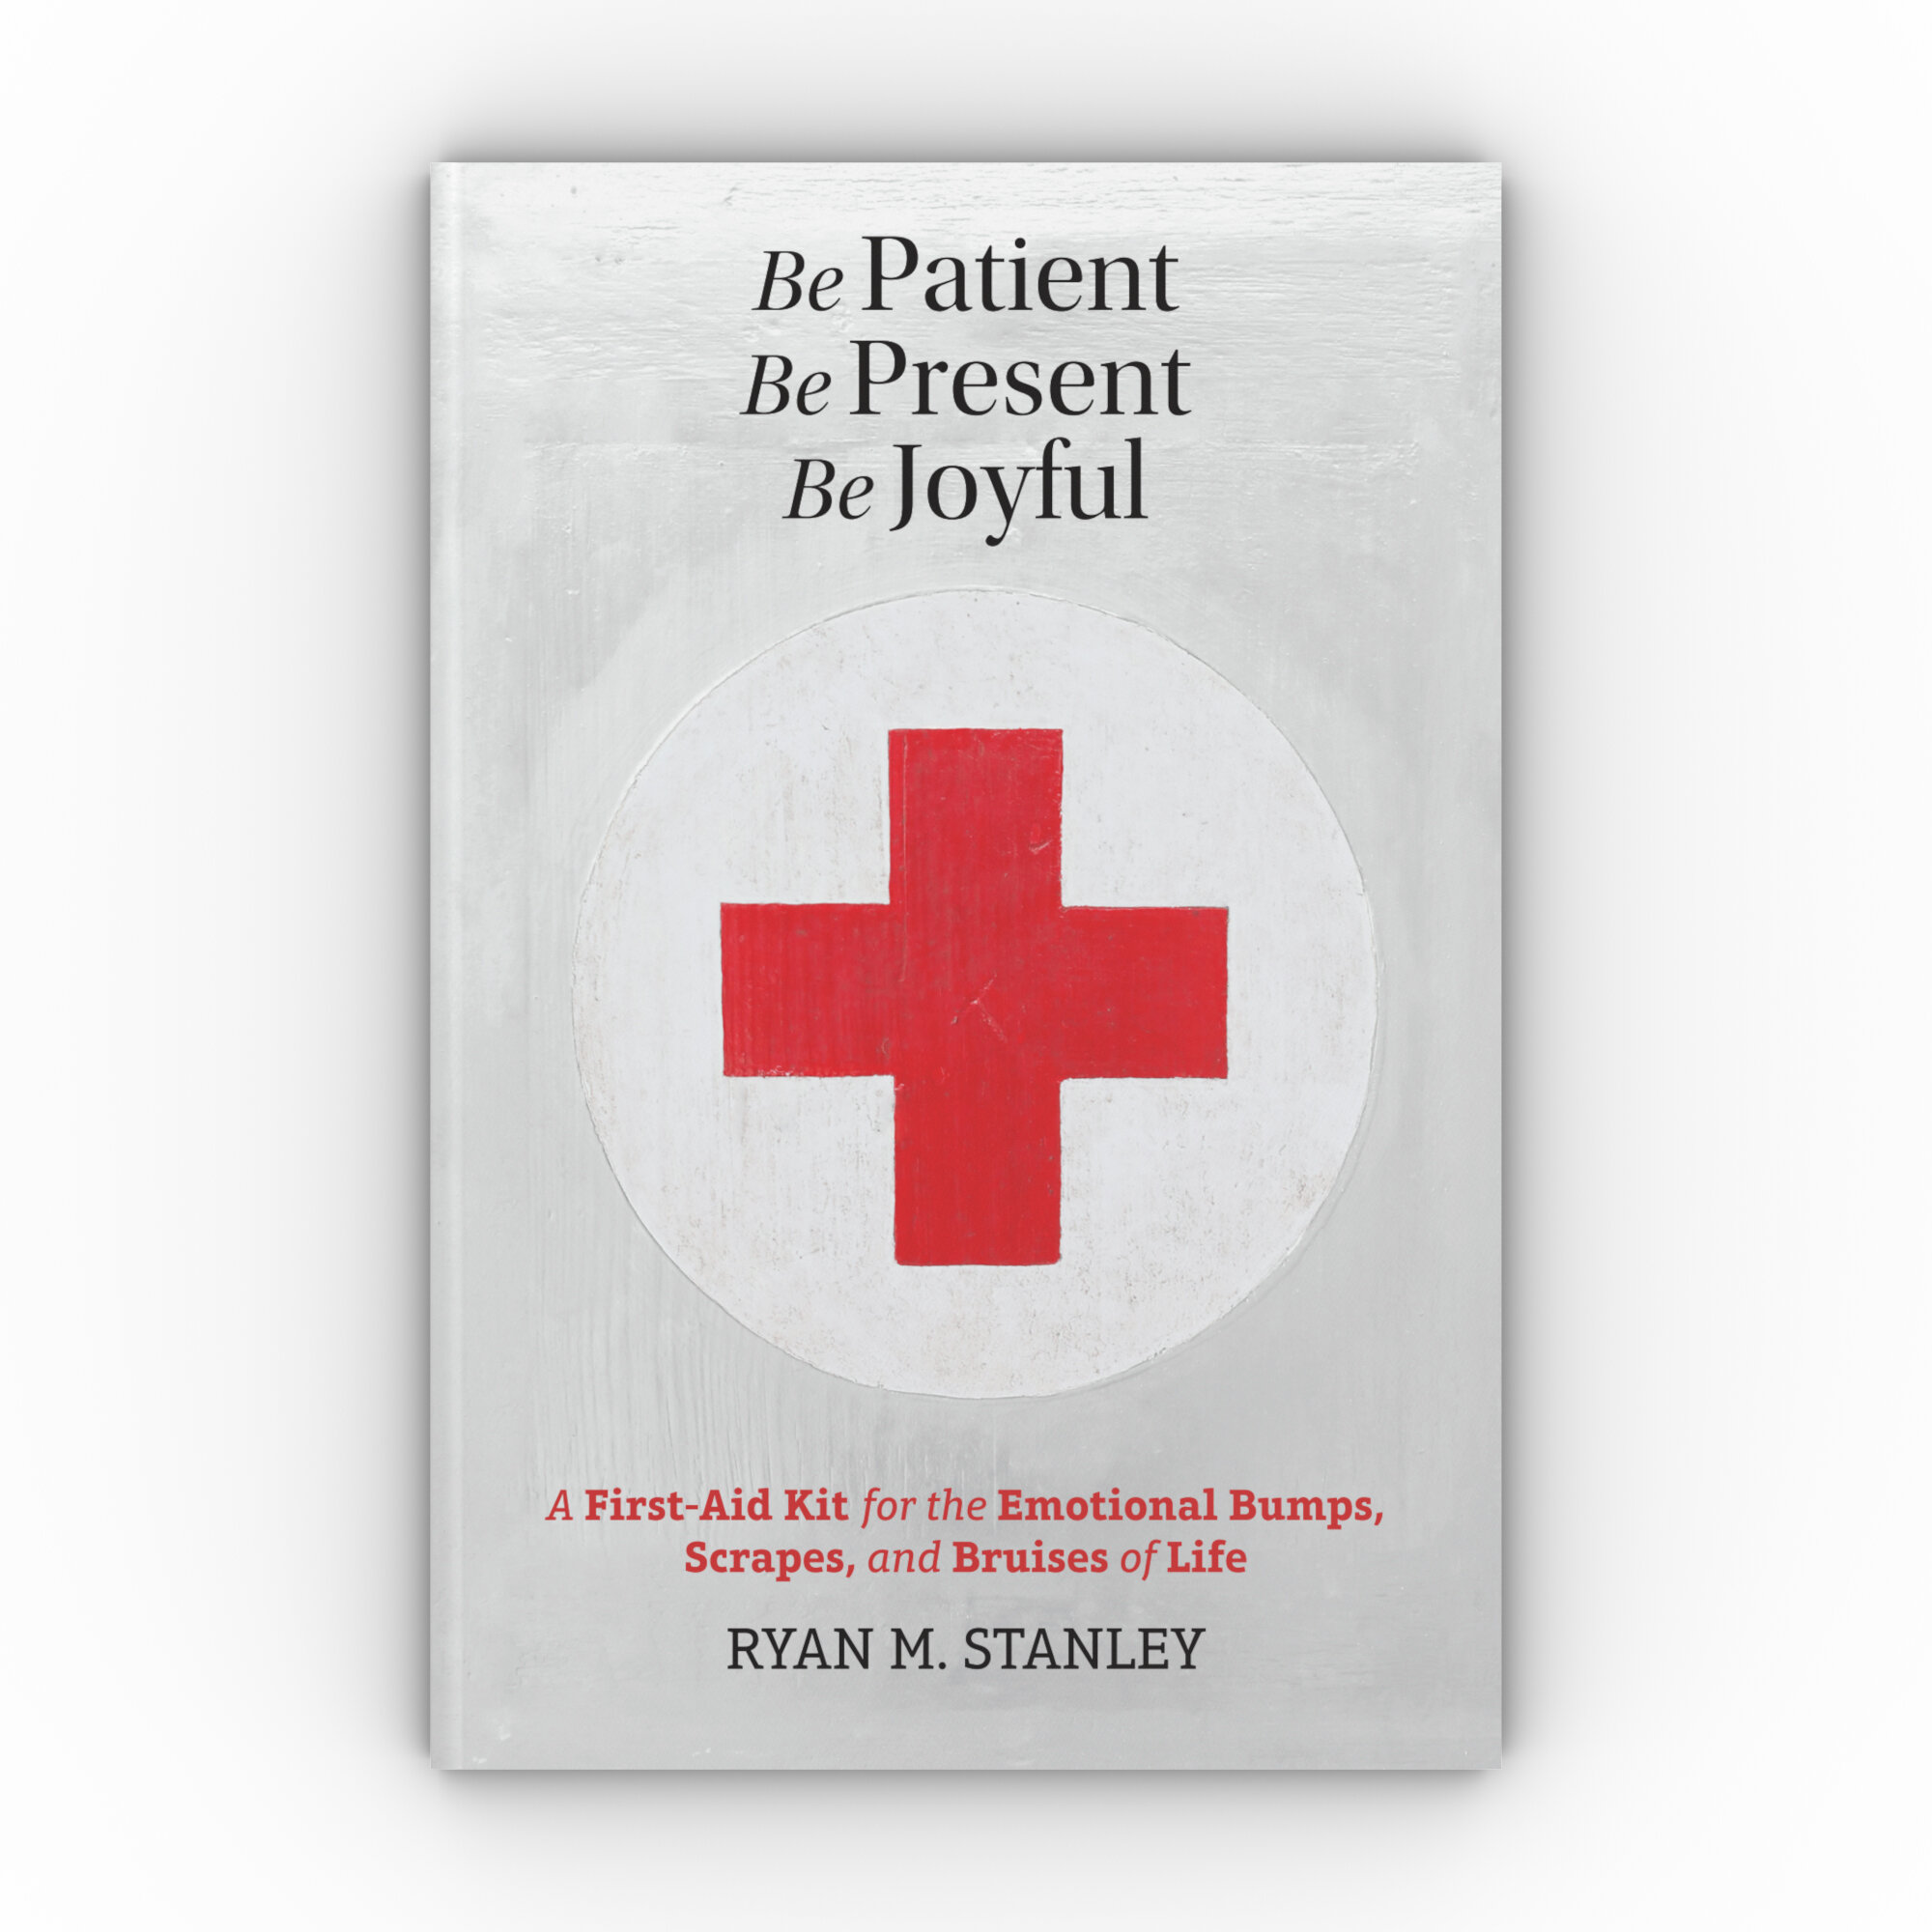 Be Patient book paperback prone 3D.jpg